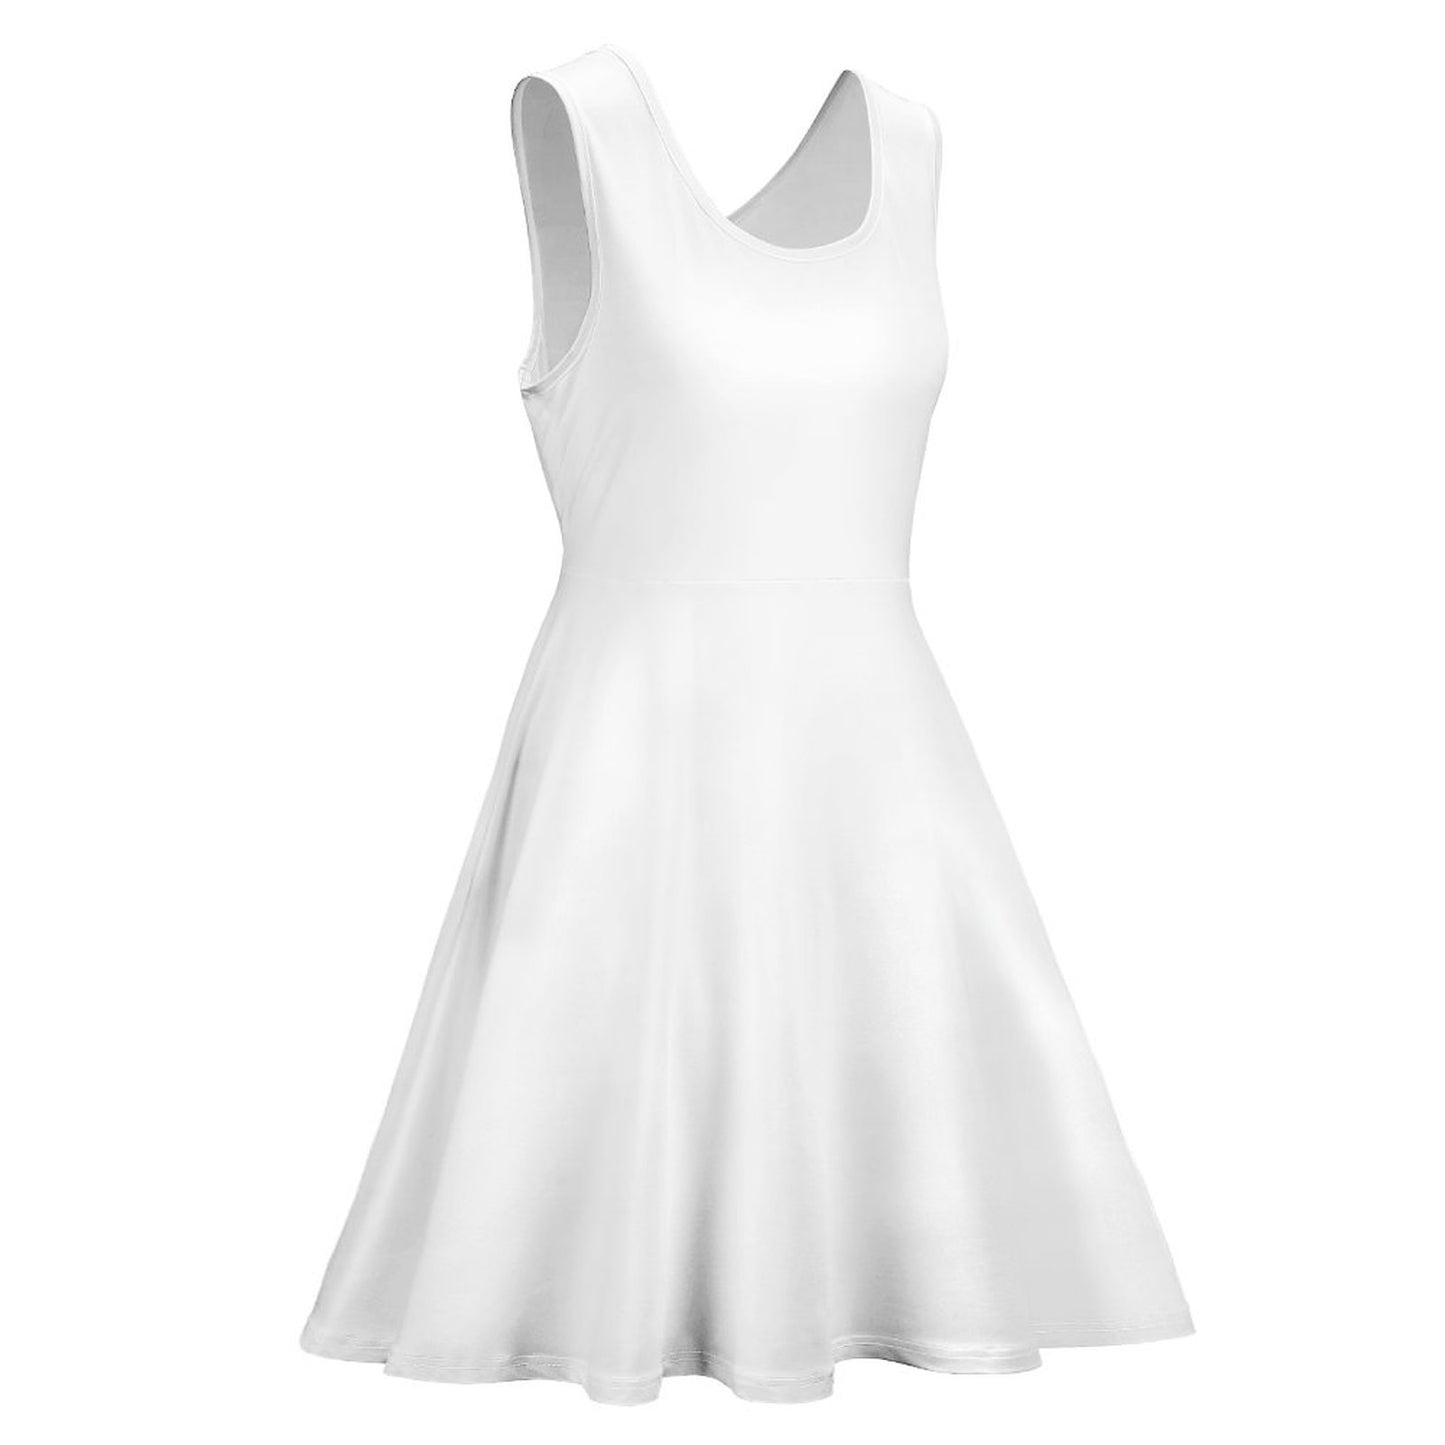 Create Your Own Round Neck Sleeveless Dress-XS to 5XL